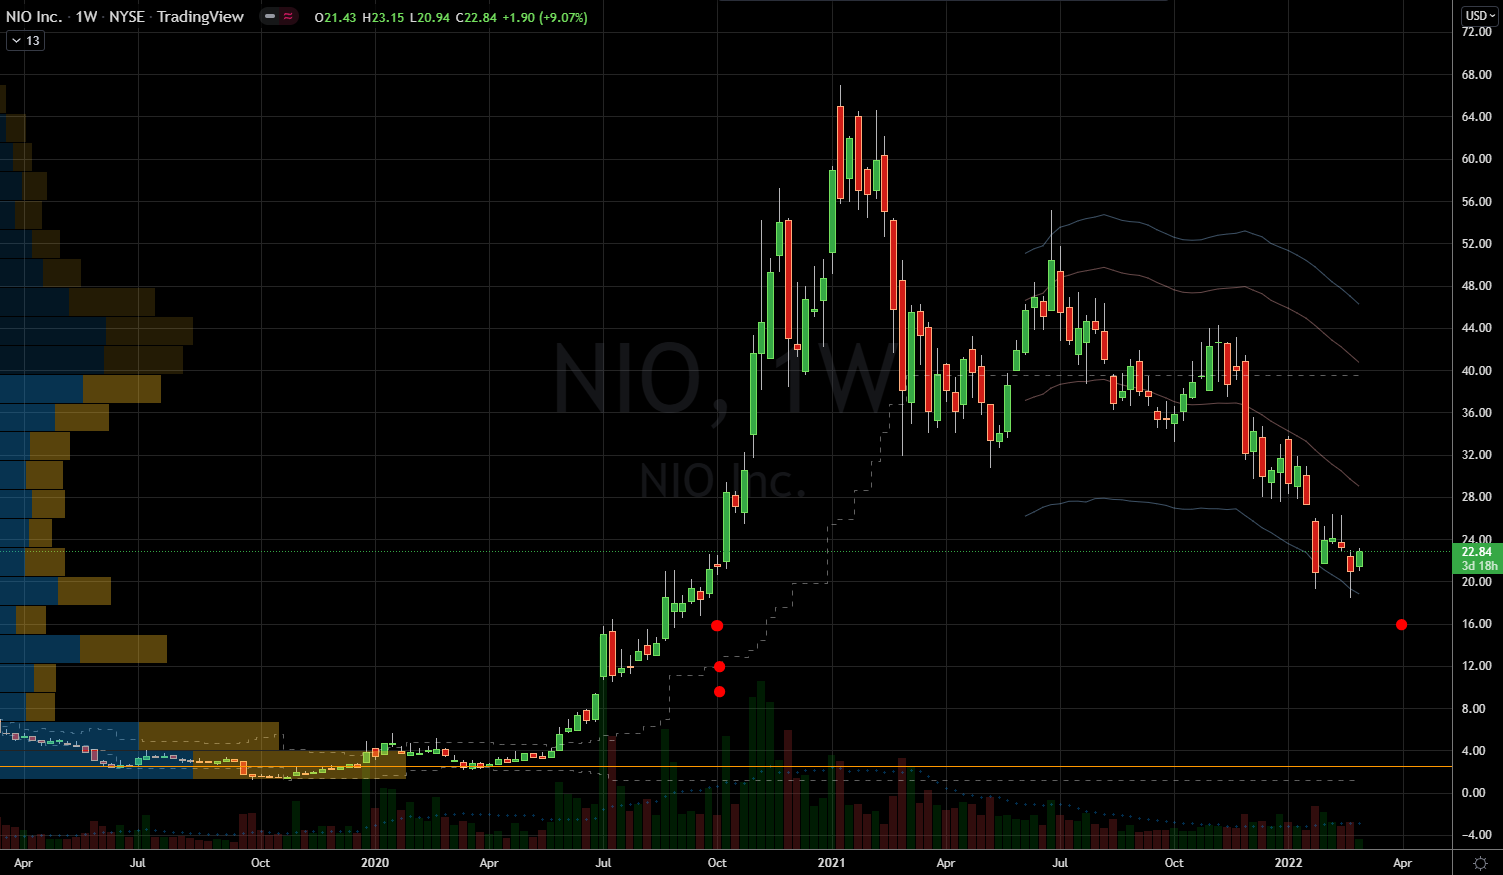 EV Stocks to Buy: Nio (NIO) Stock Chart Showing Potential Base